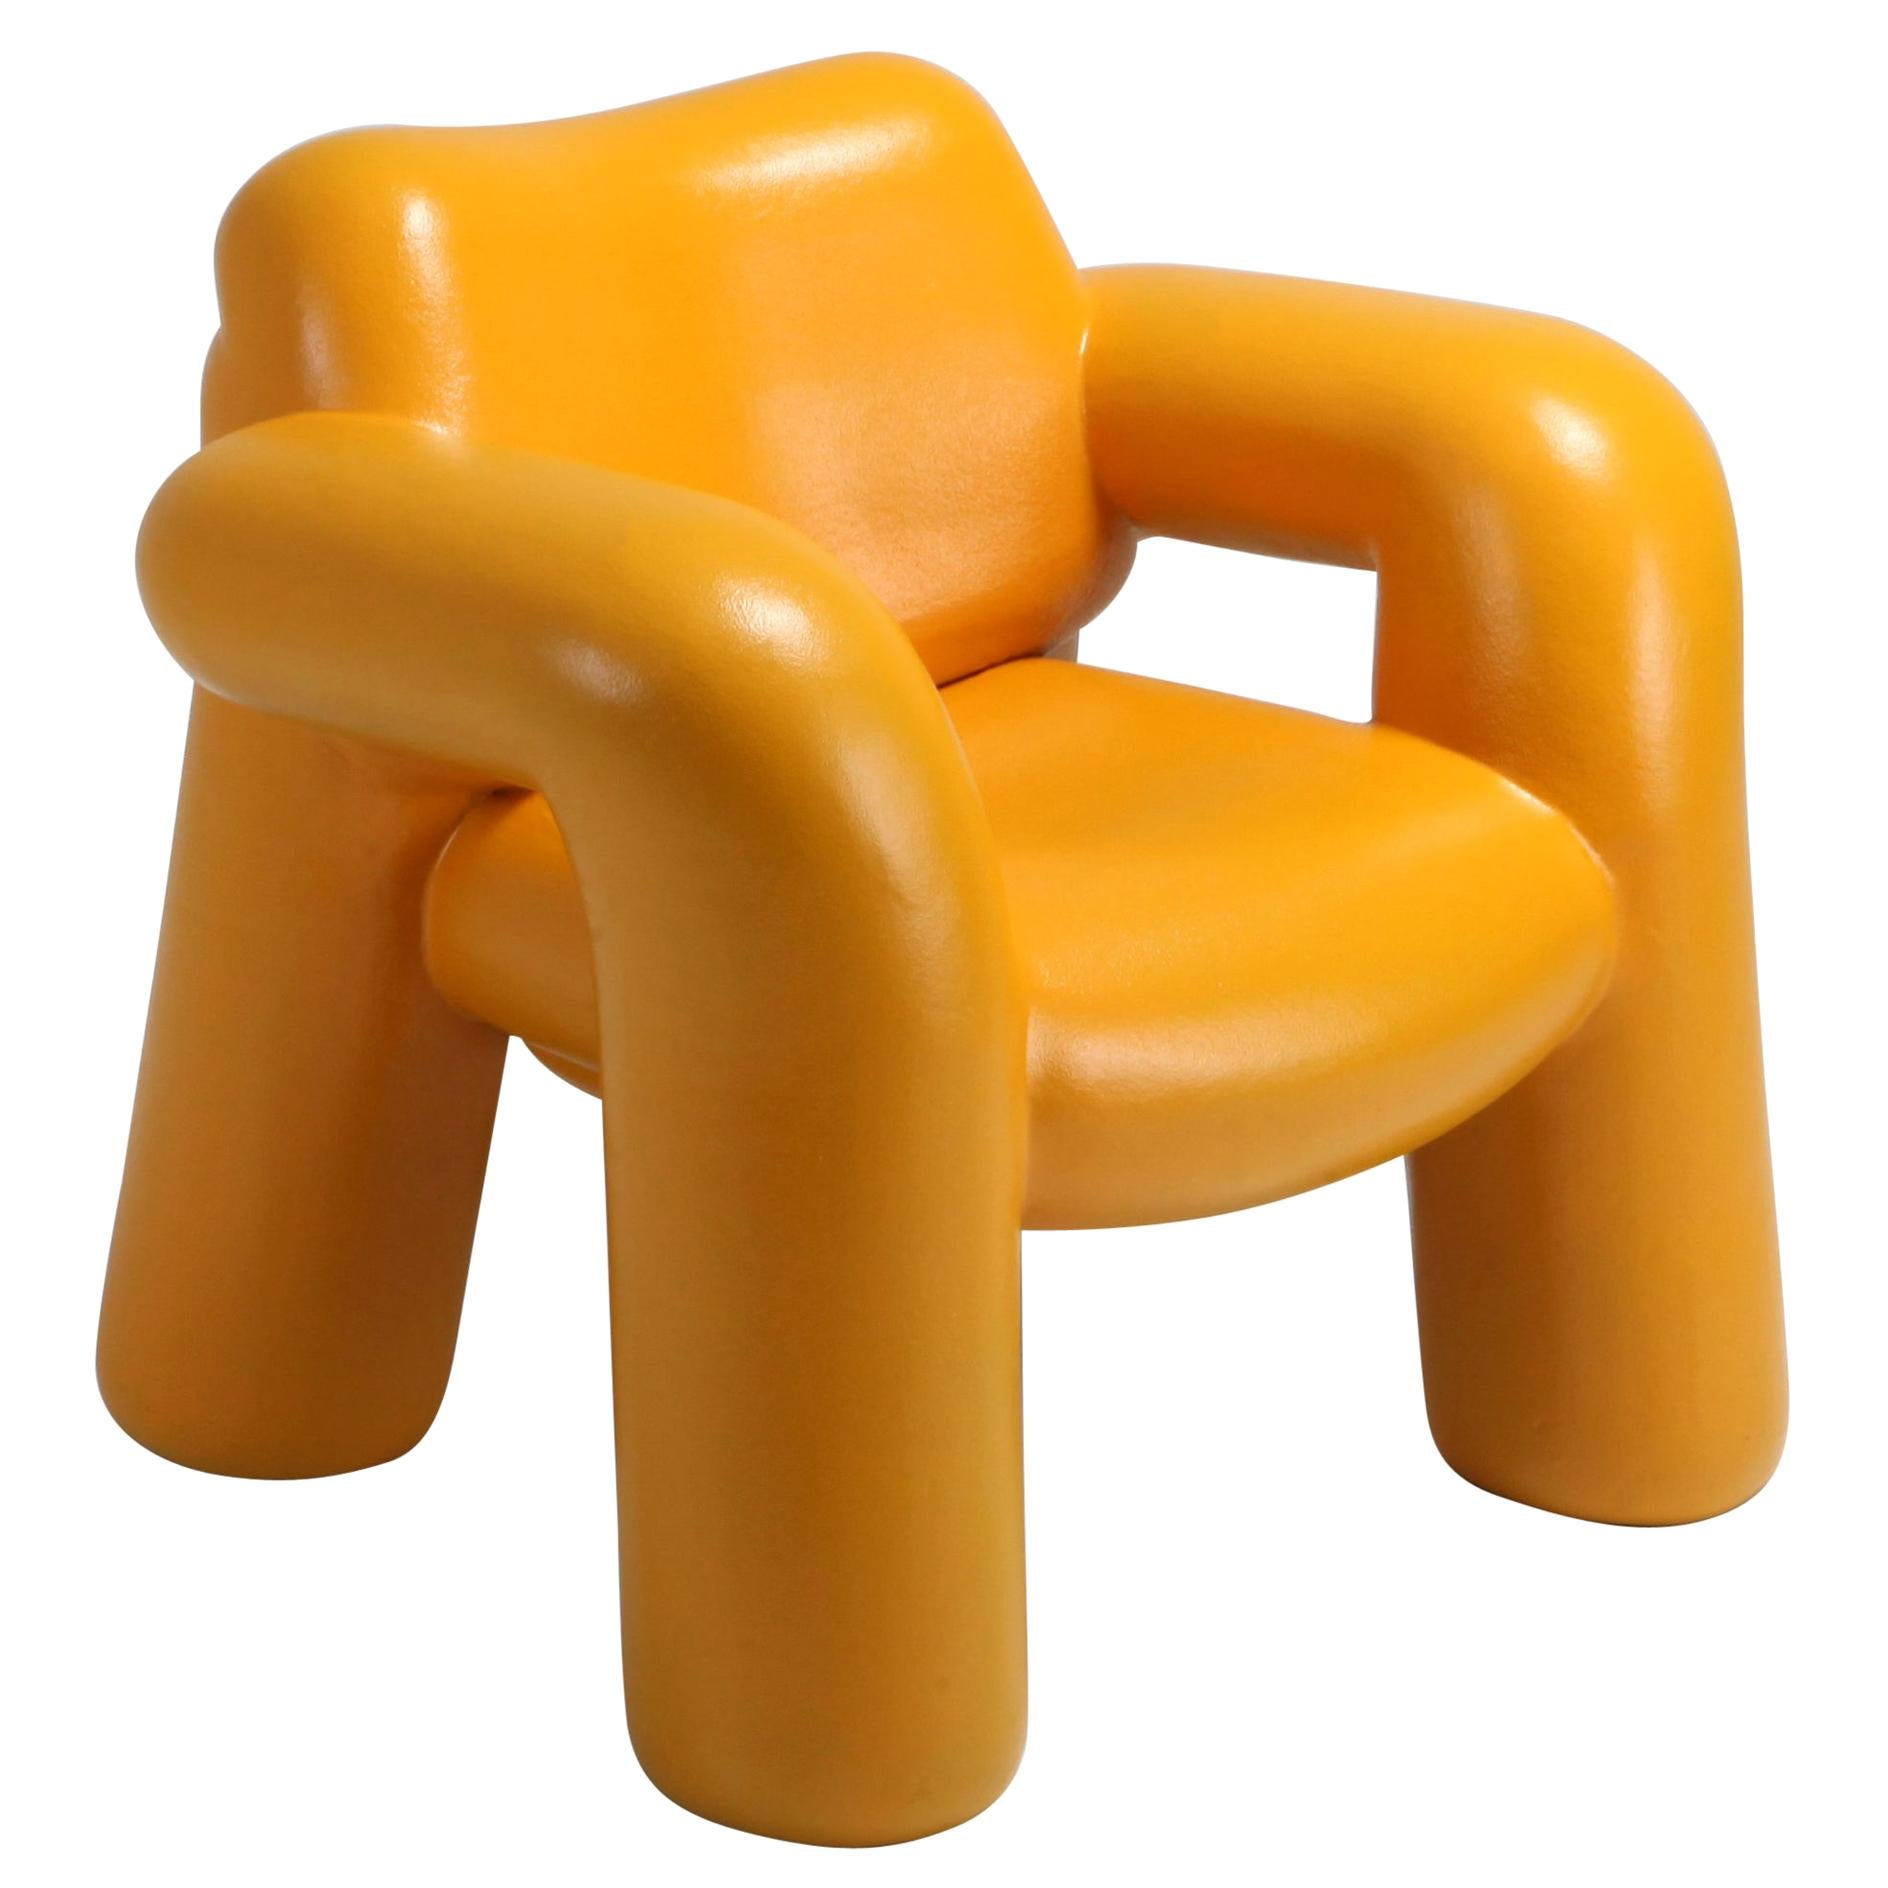 Blown-Up Chair by Schimmel & Schweikle 